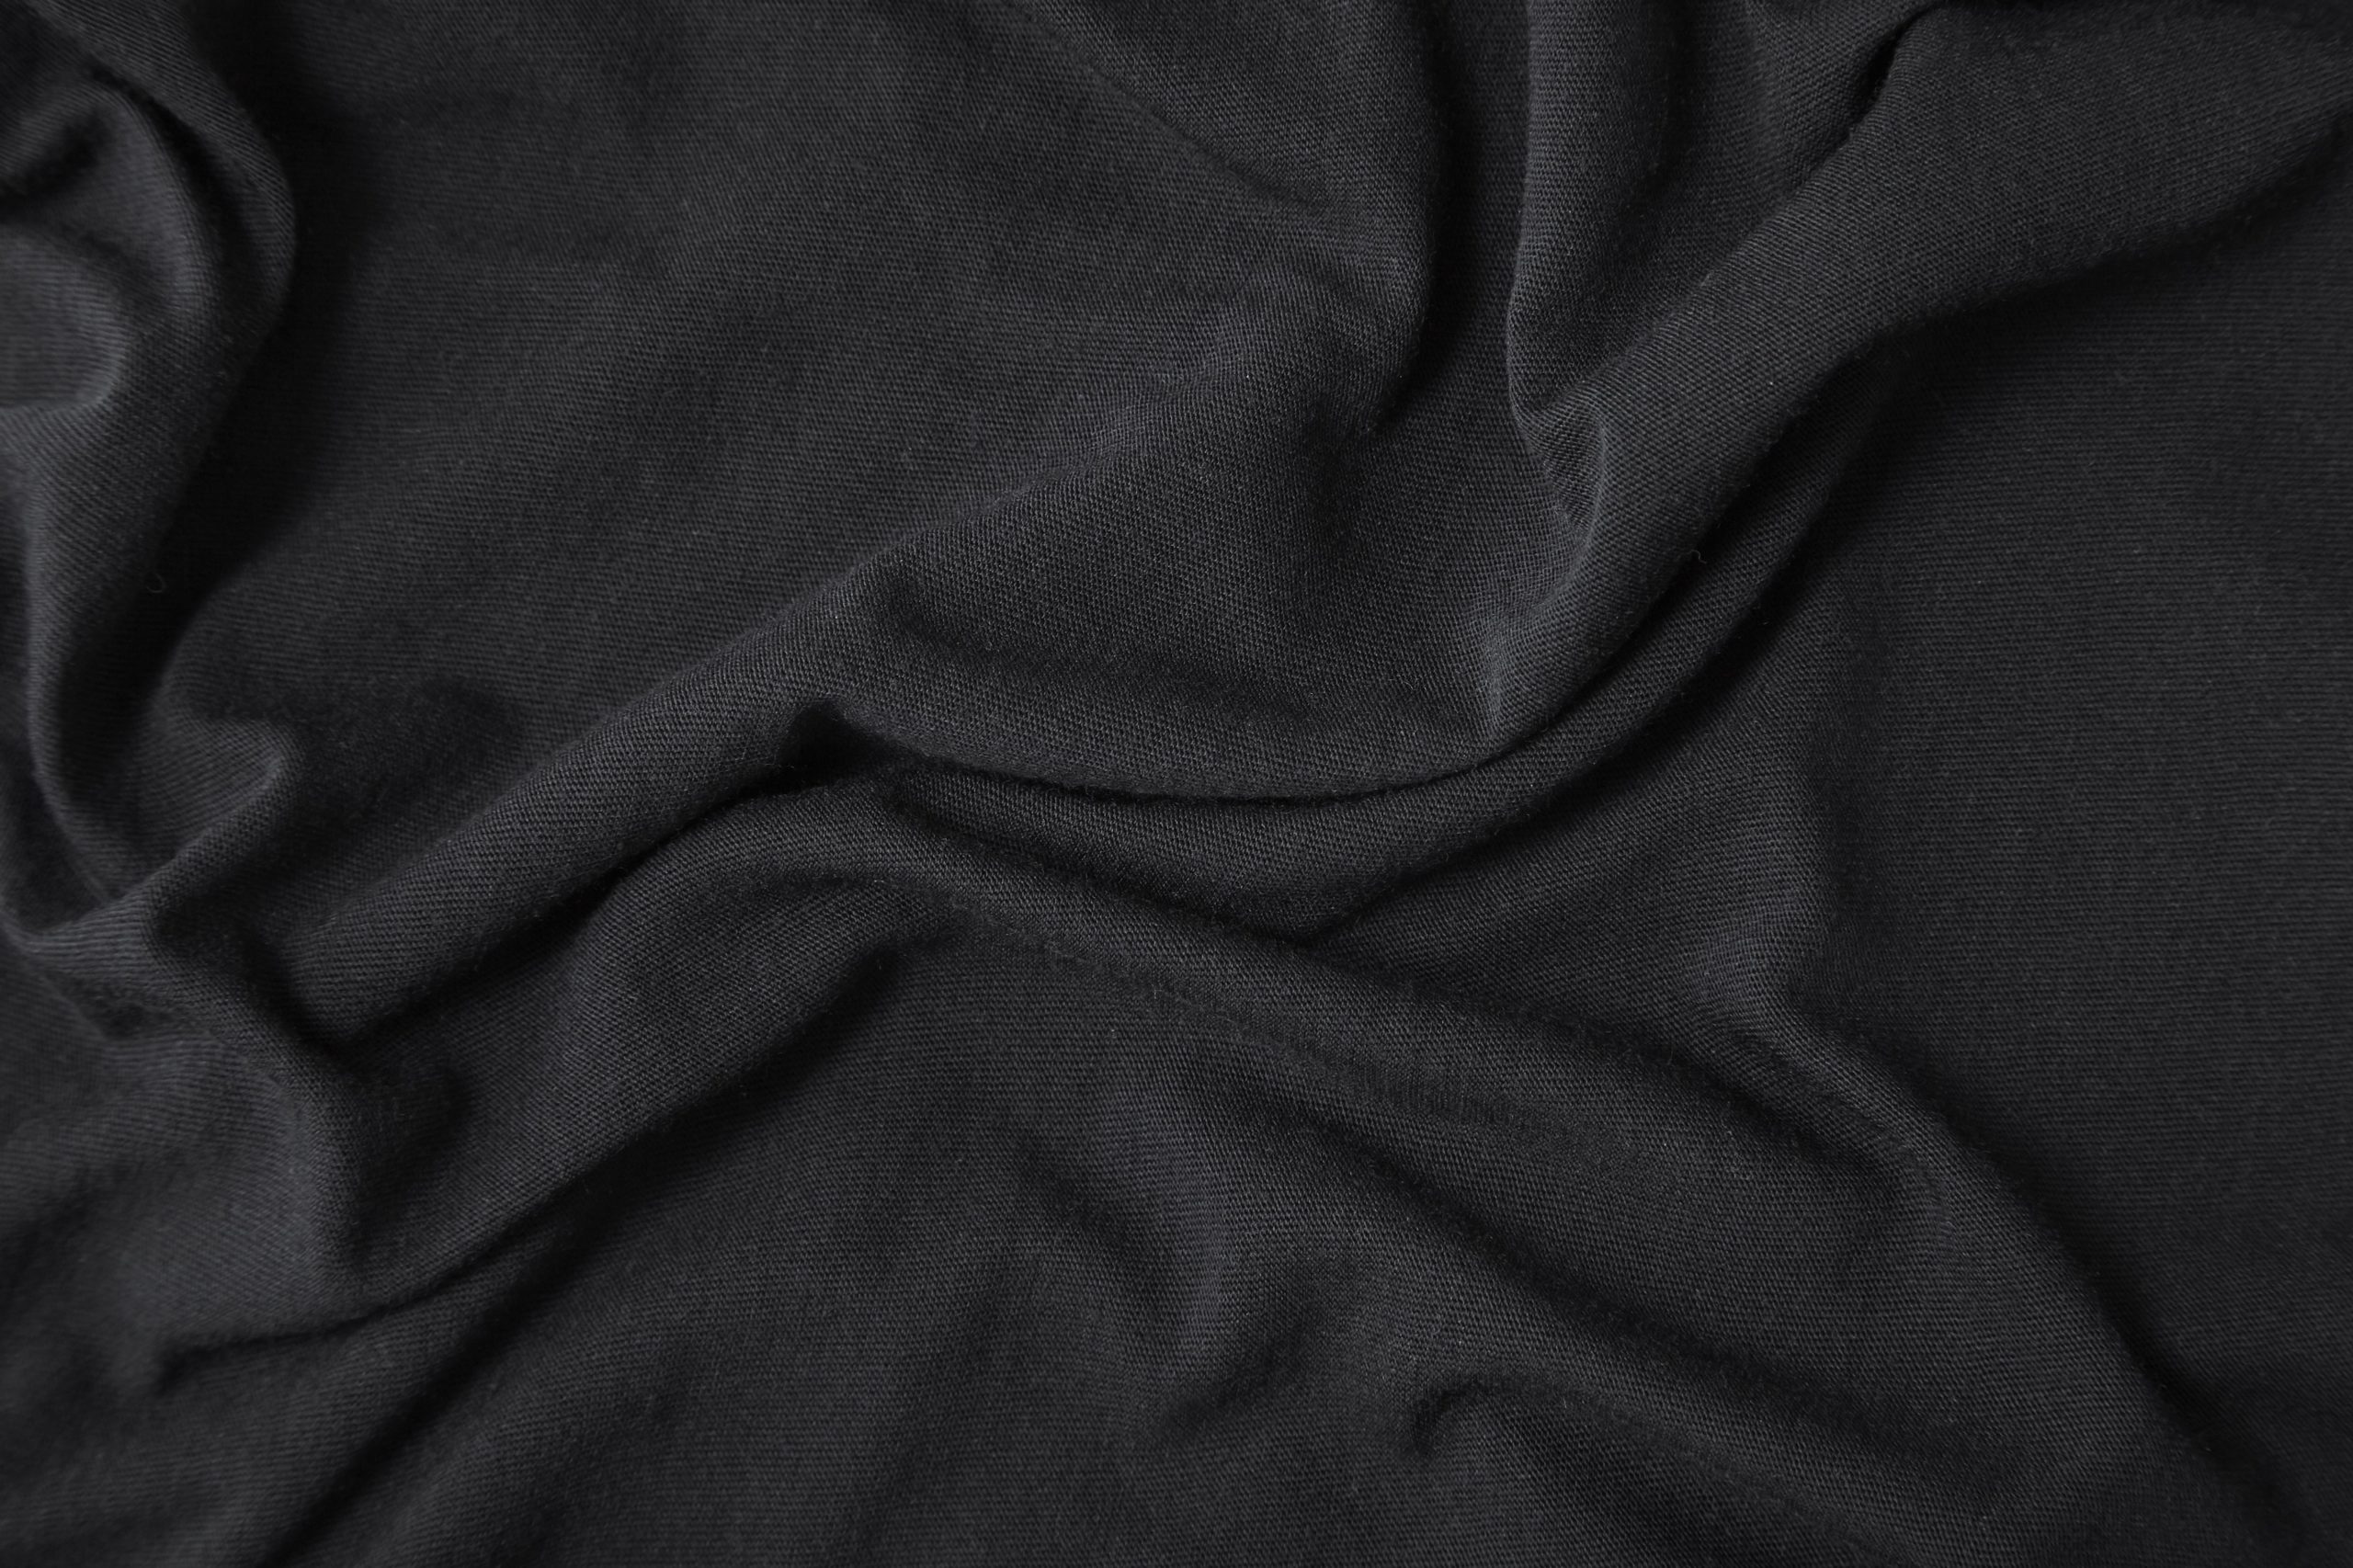 Featured Dark Fabric